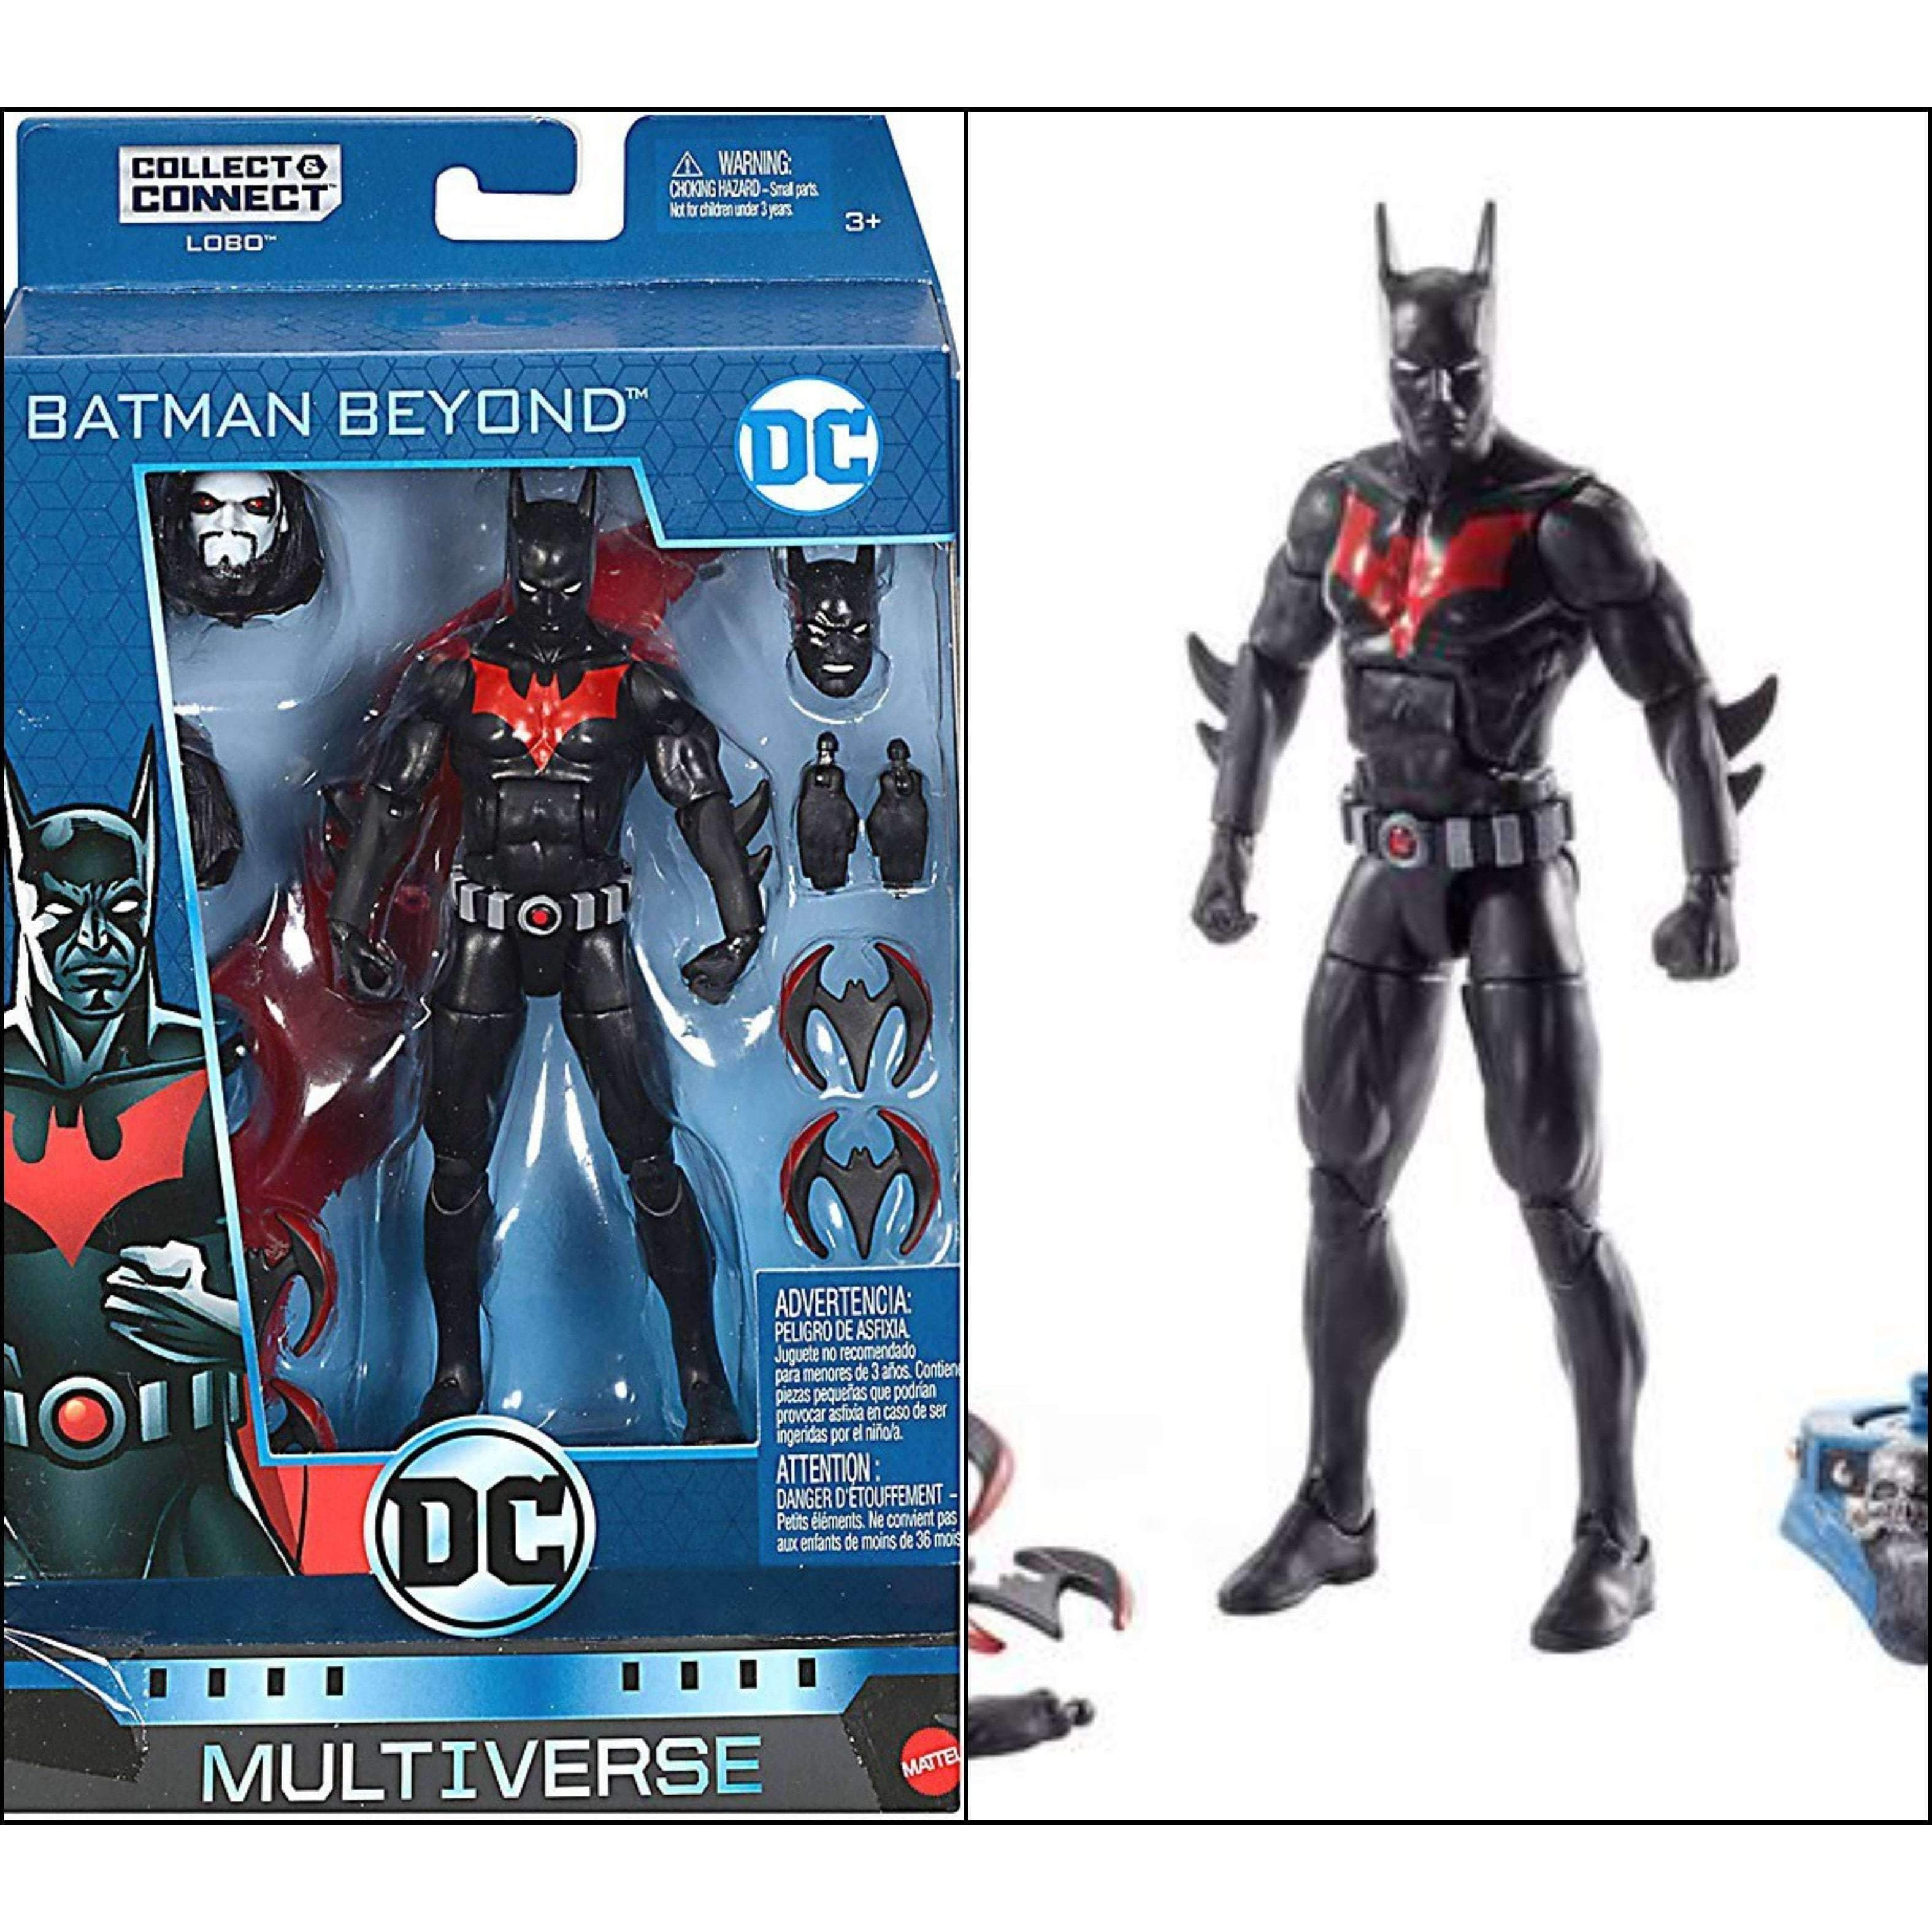 Image of DC Comics Multiverse Wave 10 (Collect & Connect Lobo) - Batman Beyond